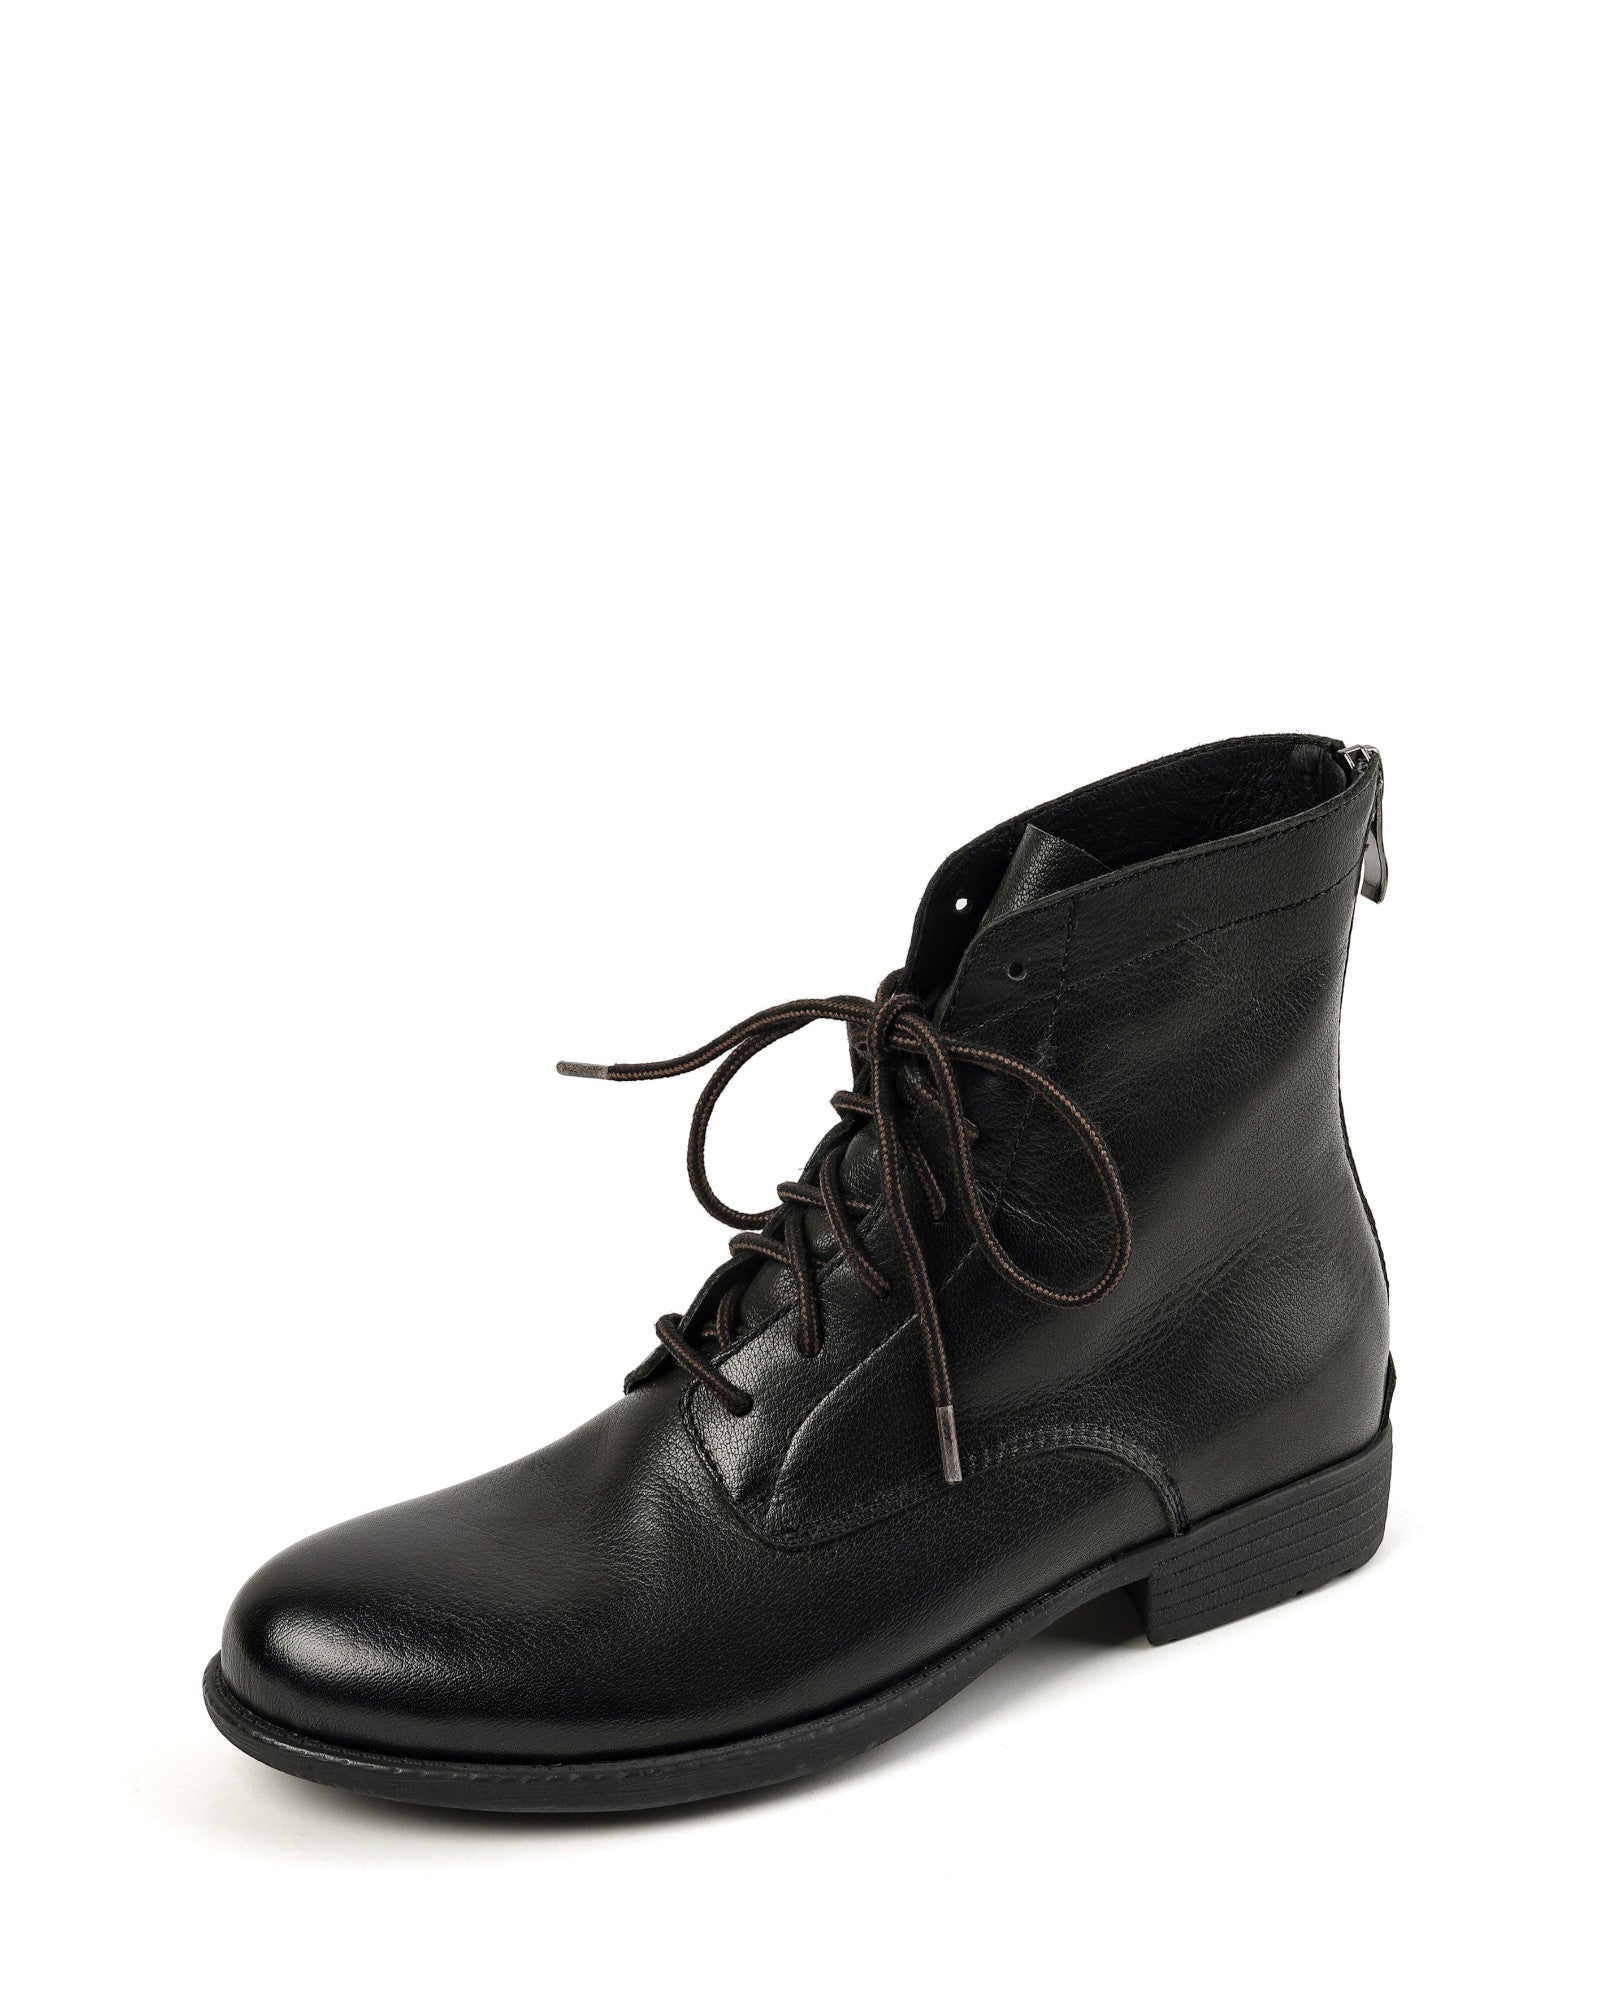 329-combat-boots-black-leather